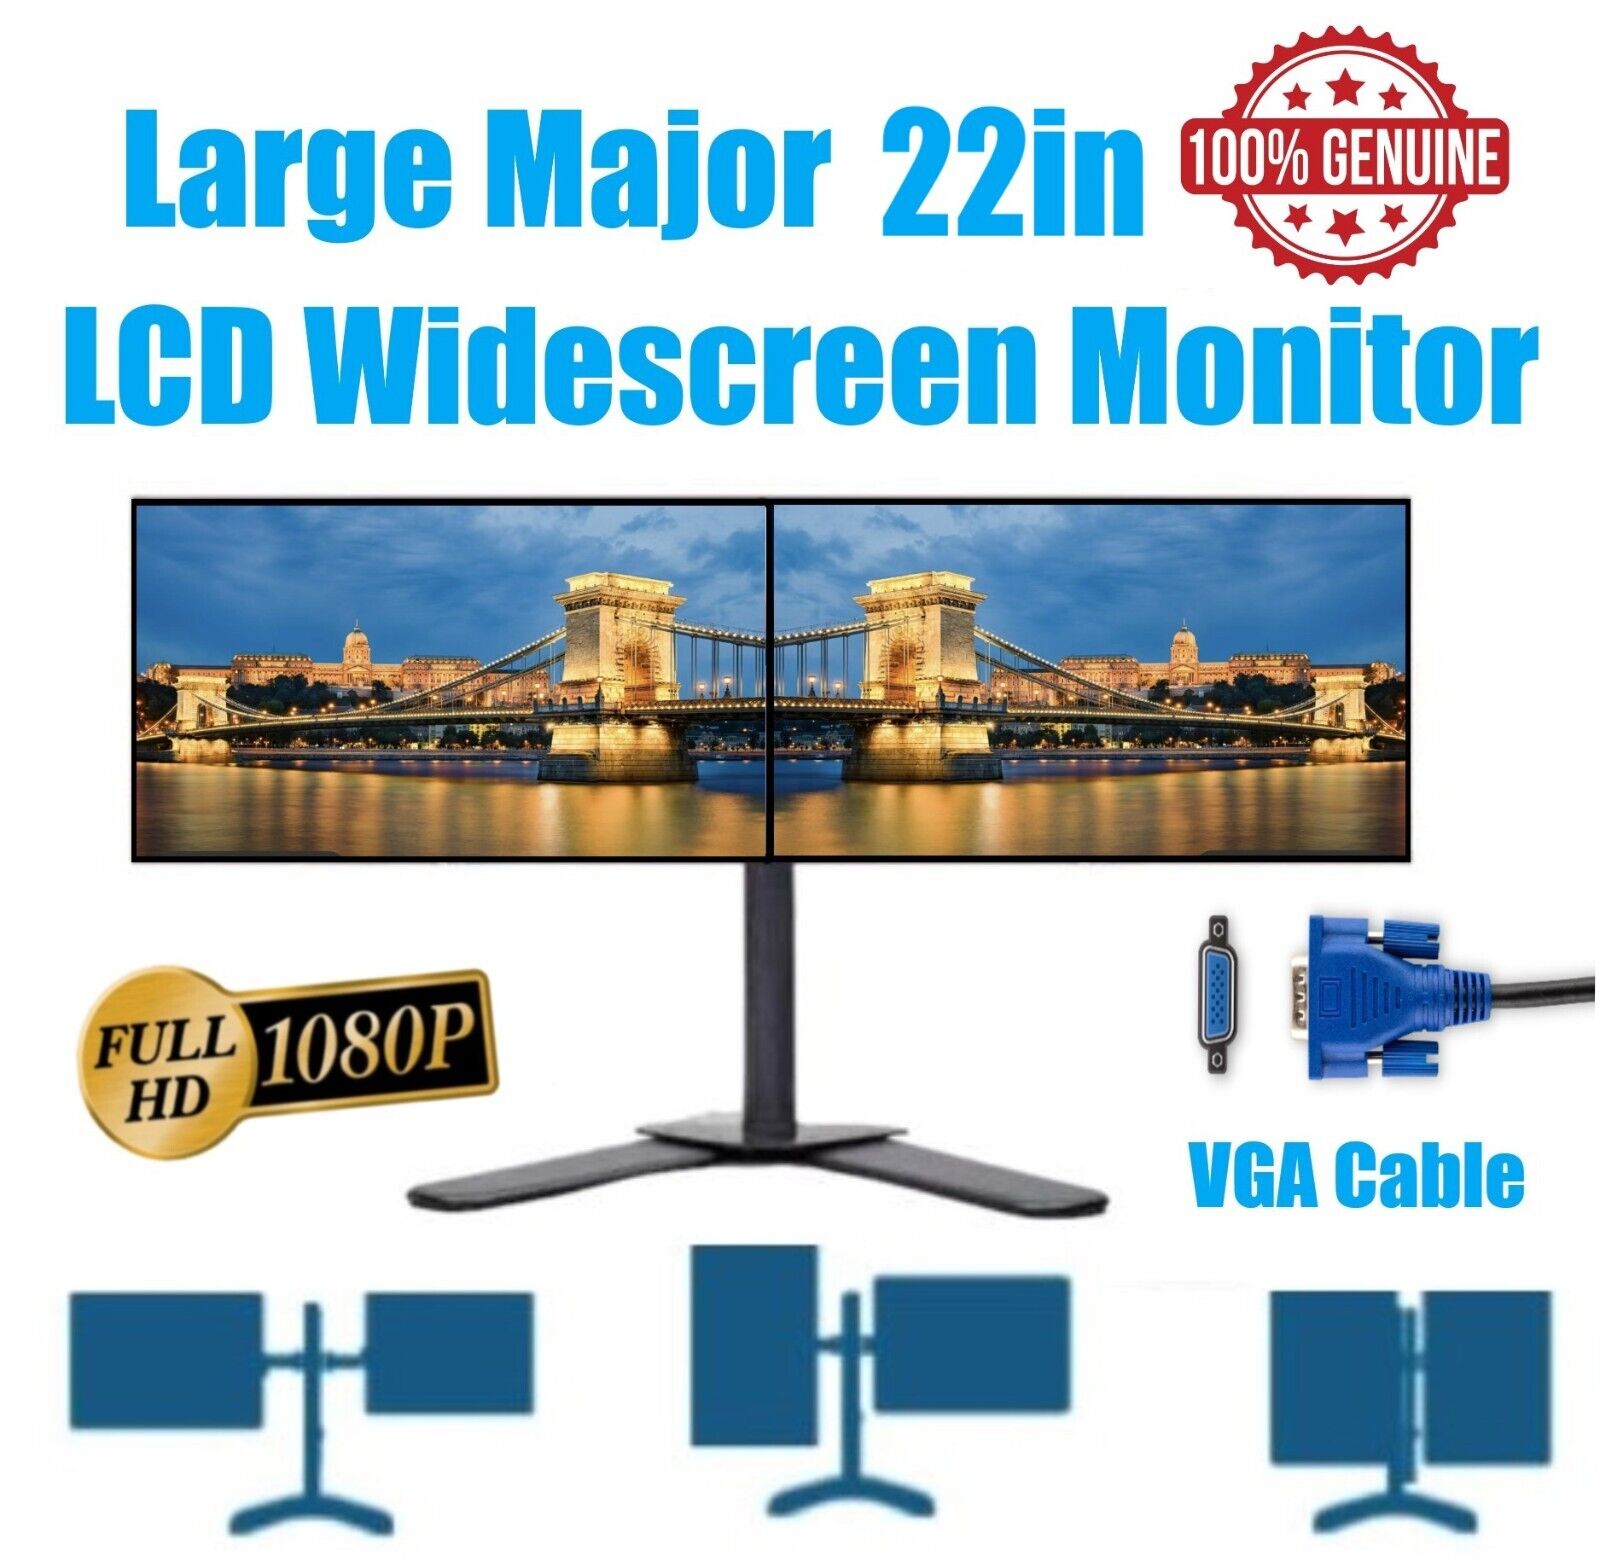 Dual 22inch OEM Large Major LCD Widescreen Monitors 1920x1080p w/Dual Stand VGA